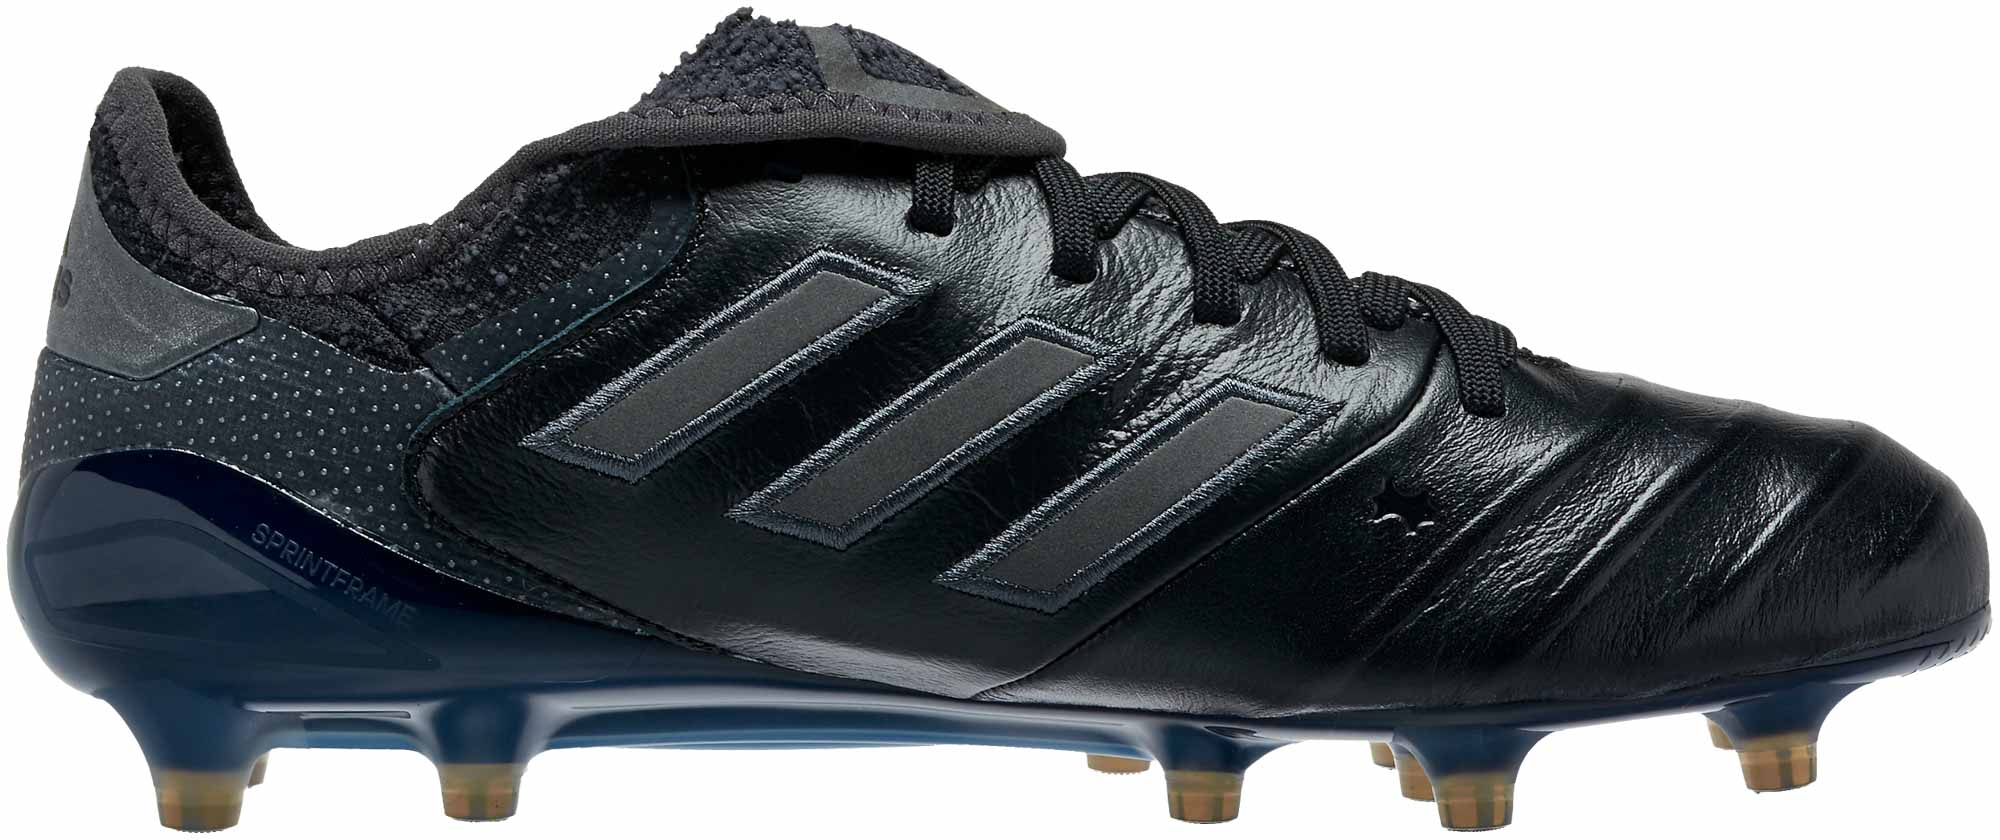 adidas Copa 18.1 FG - Black adidas Copa Soccer Cleats